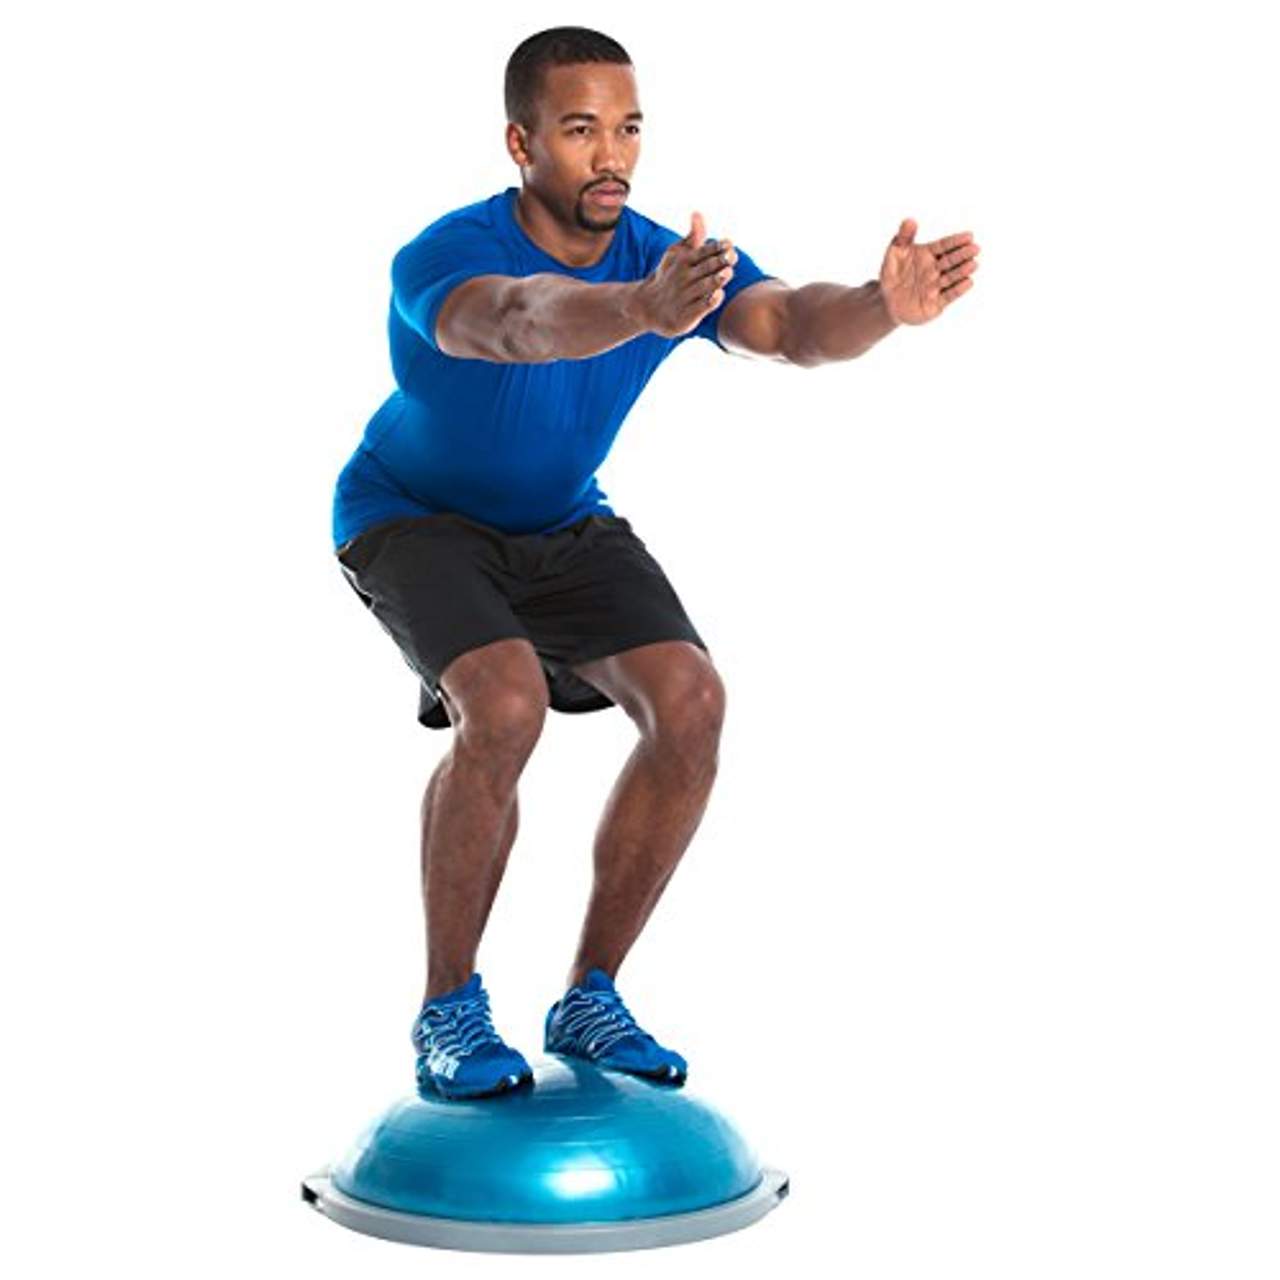 Bosu Balance Trainer Pro